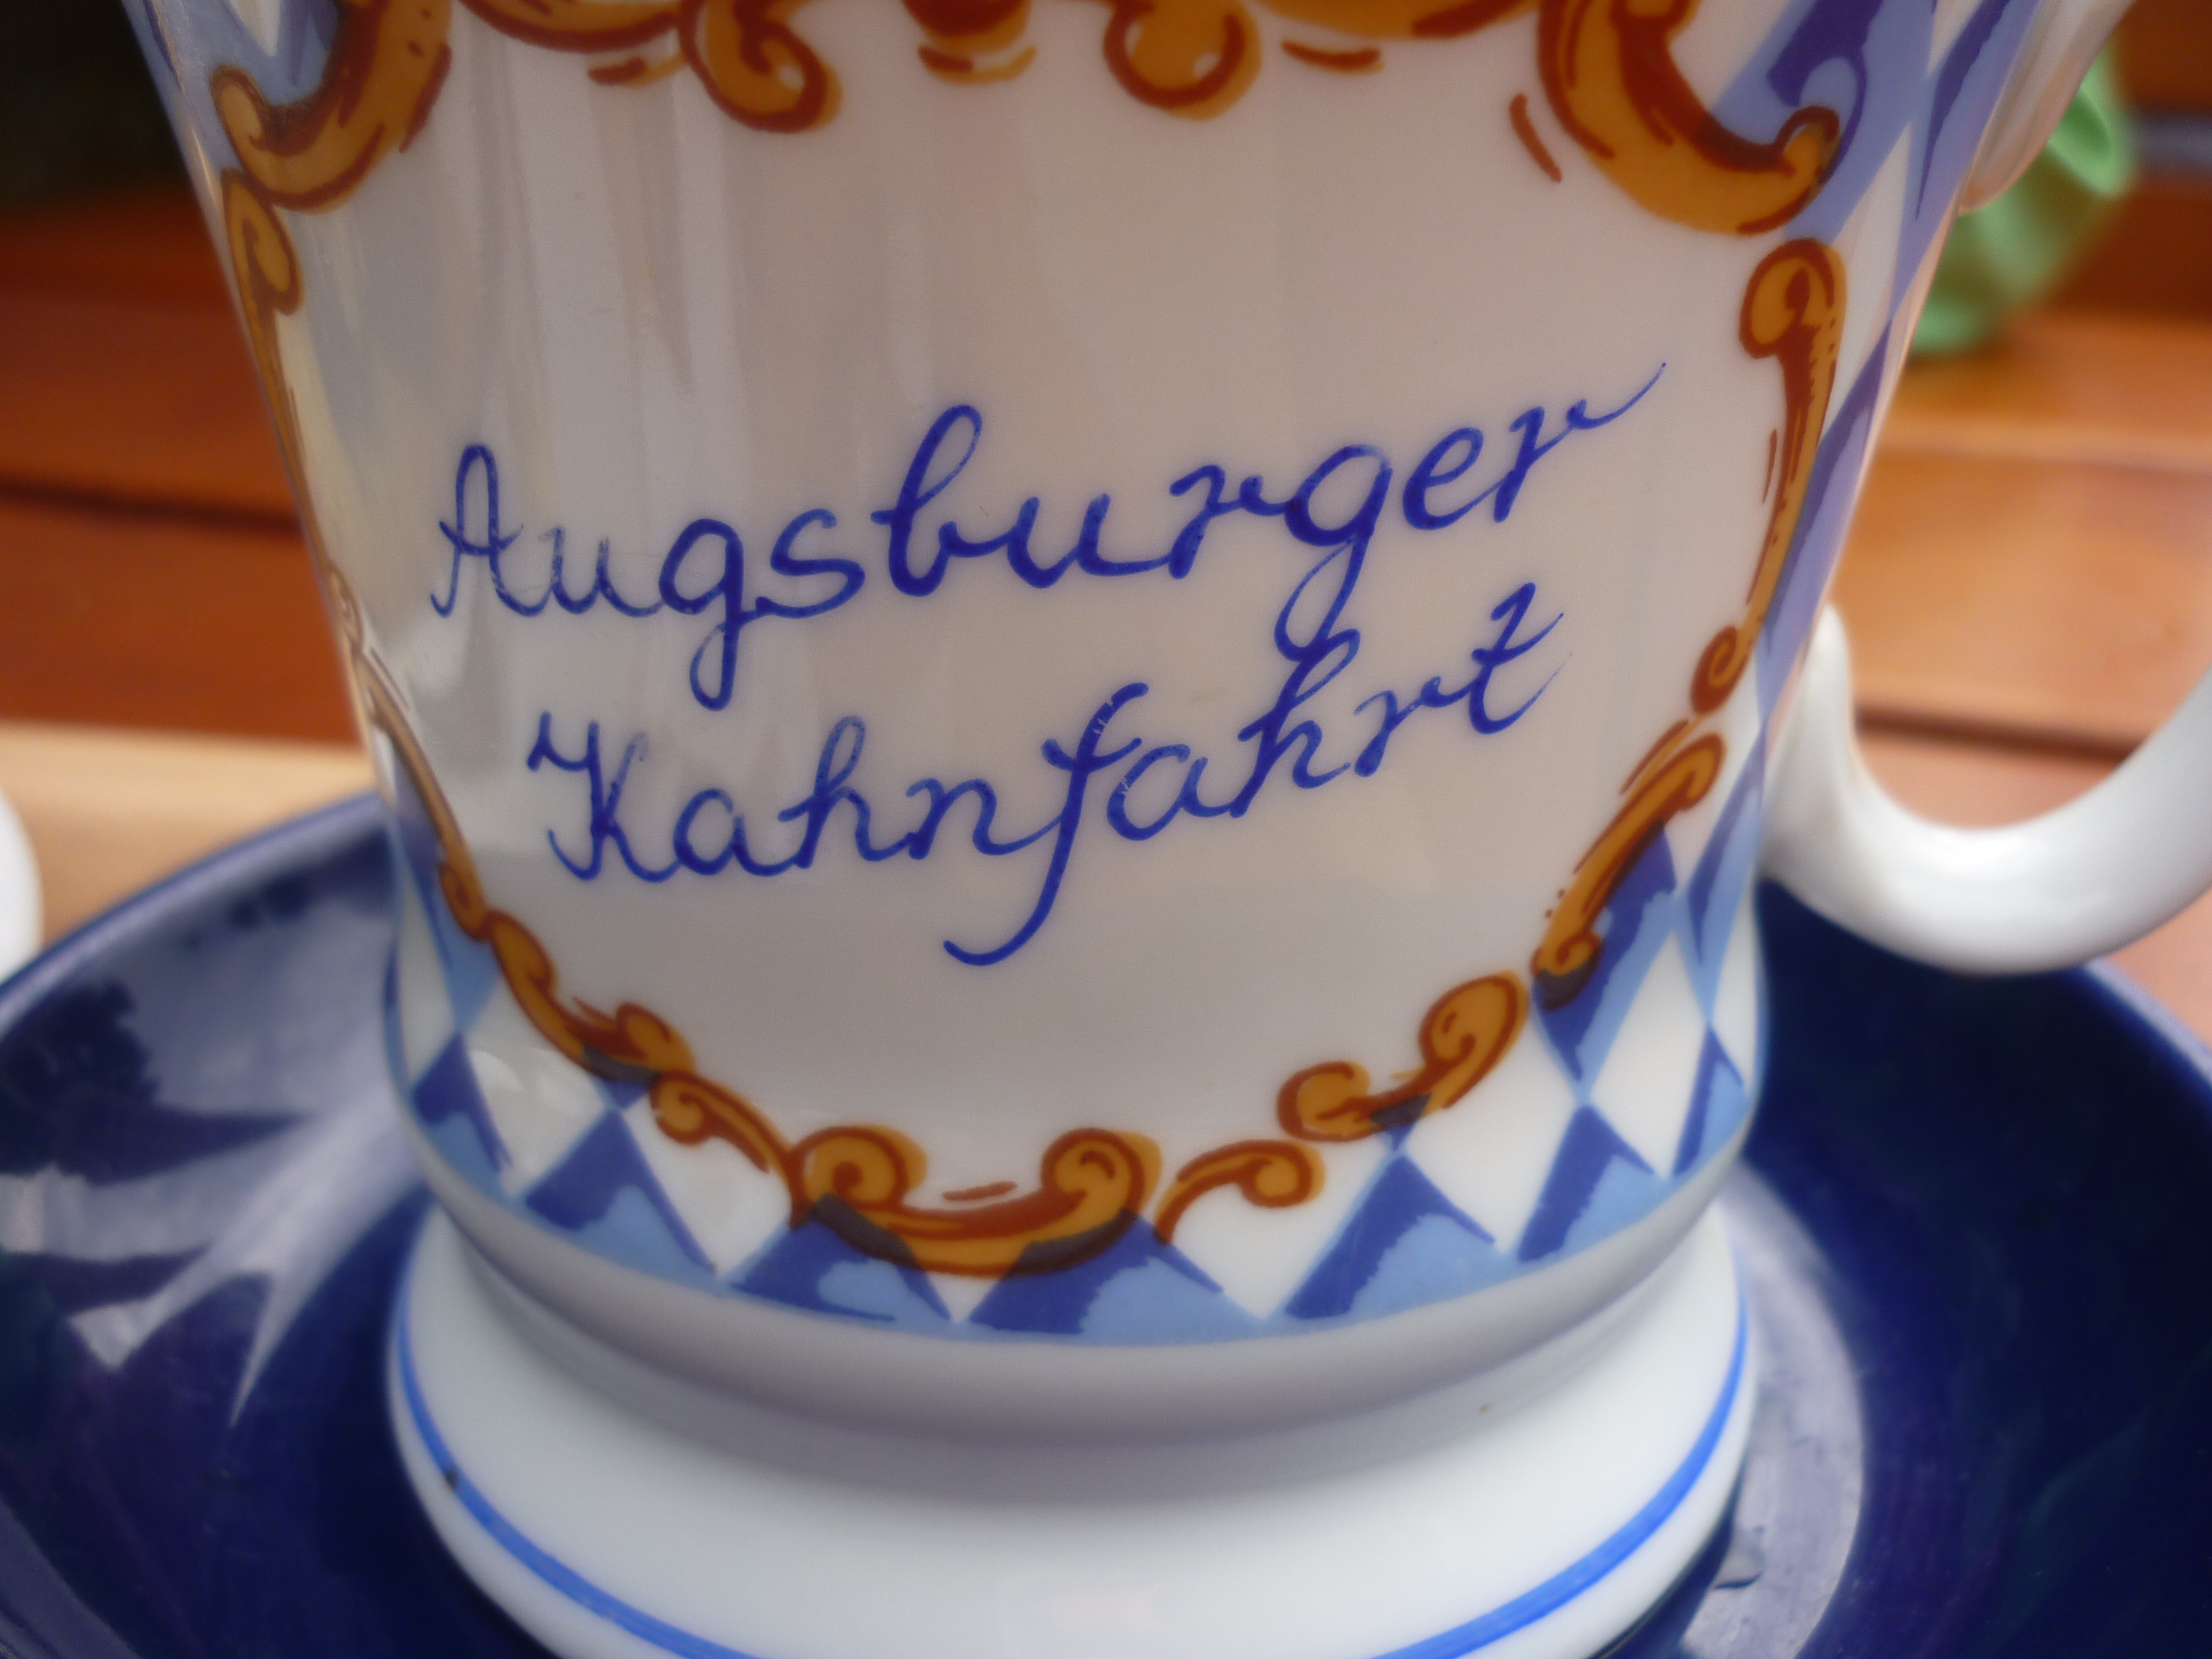 Augsburger Kahnfahrt